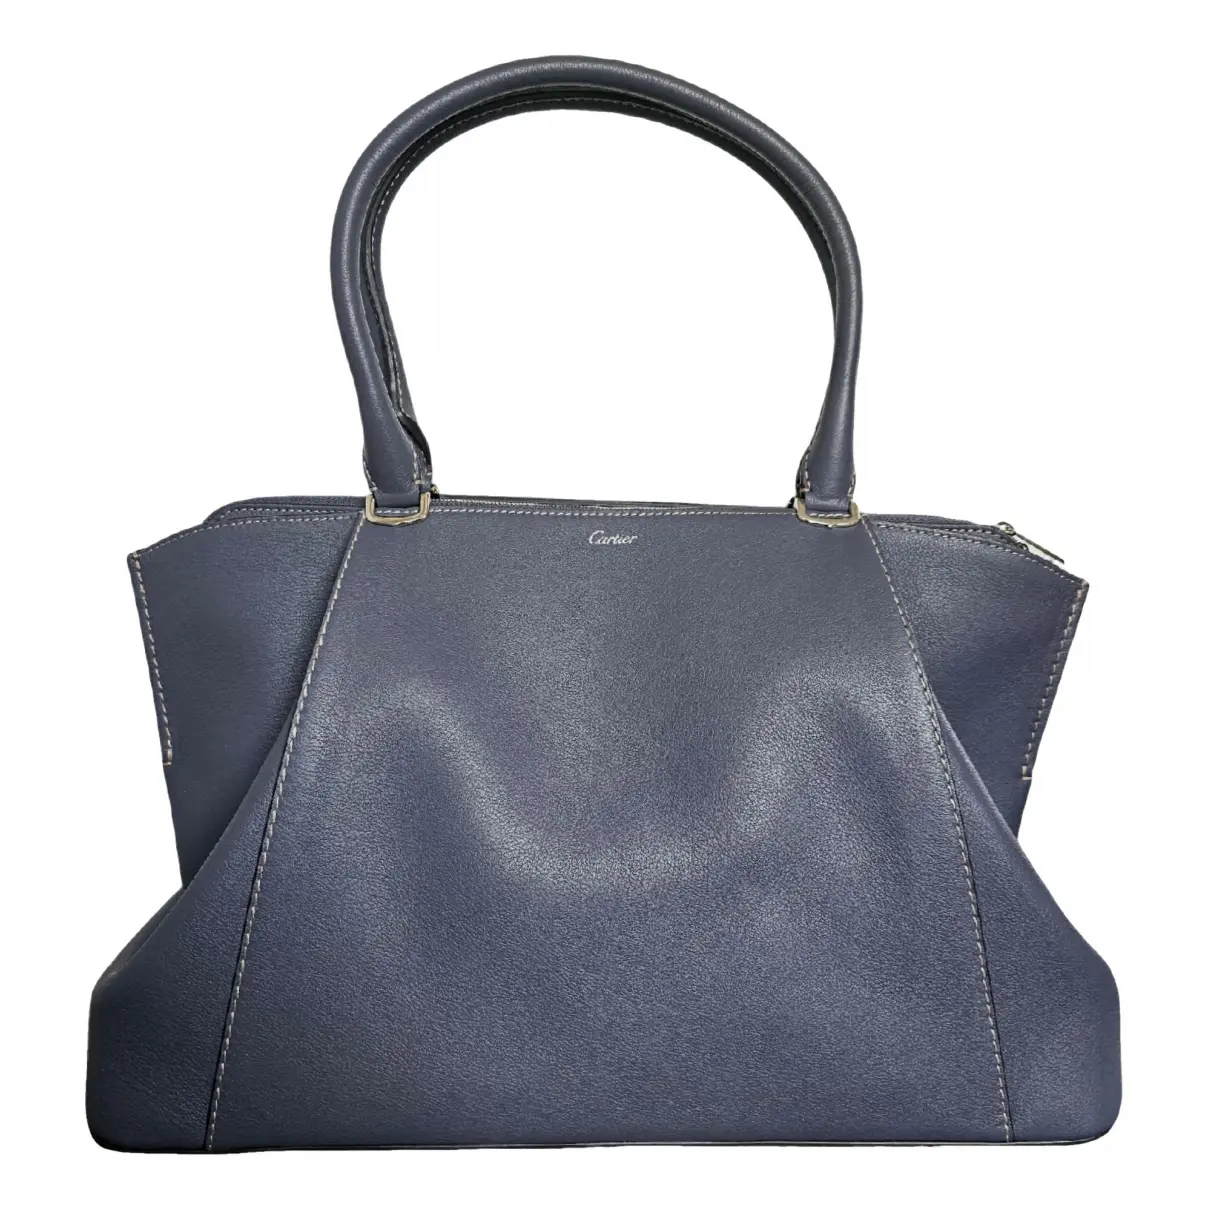 C leather handbag